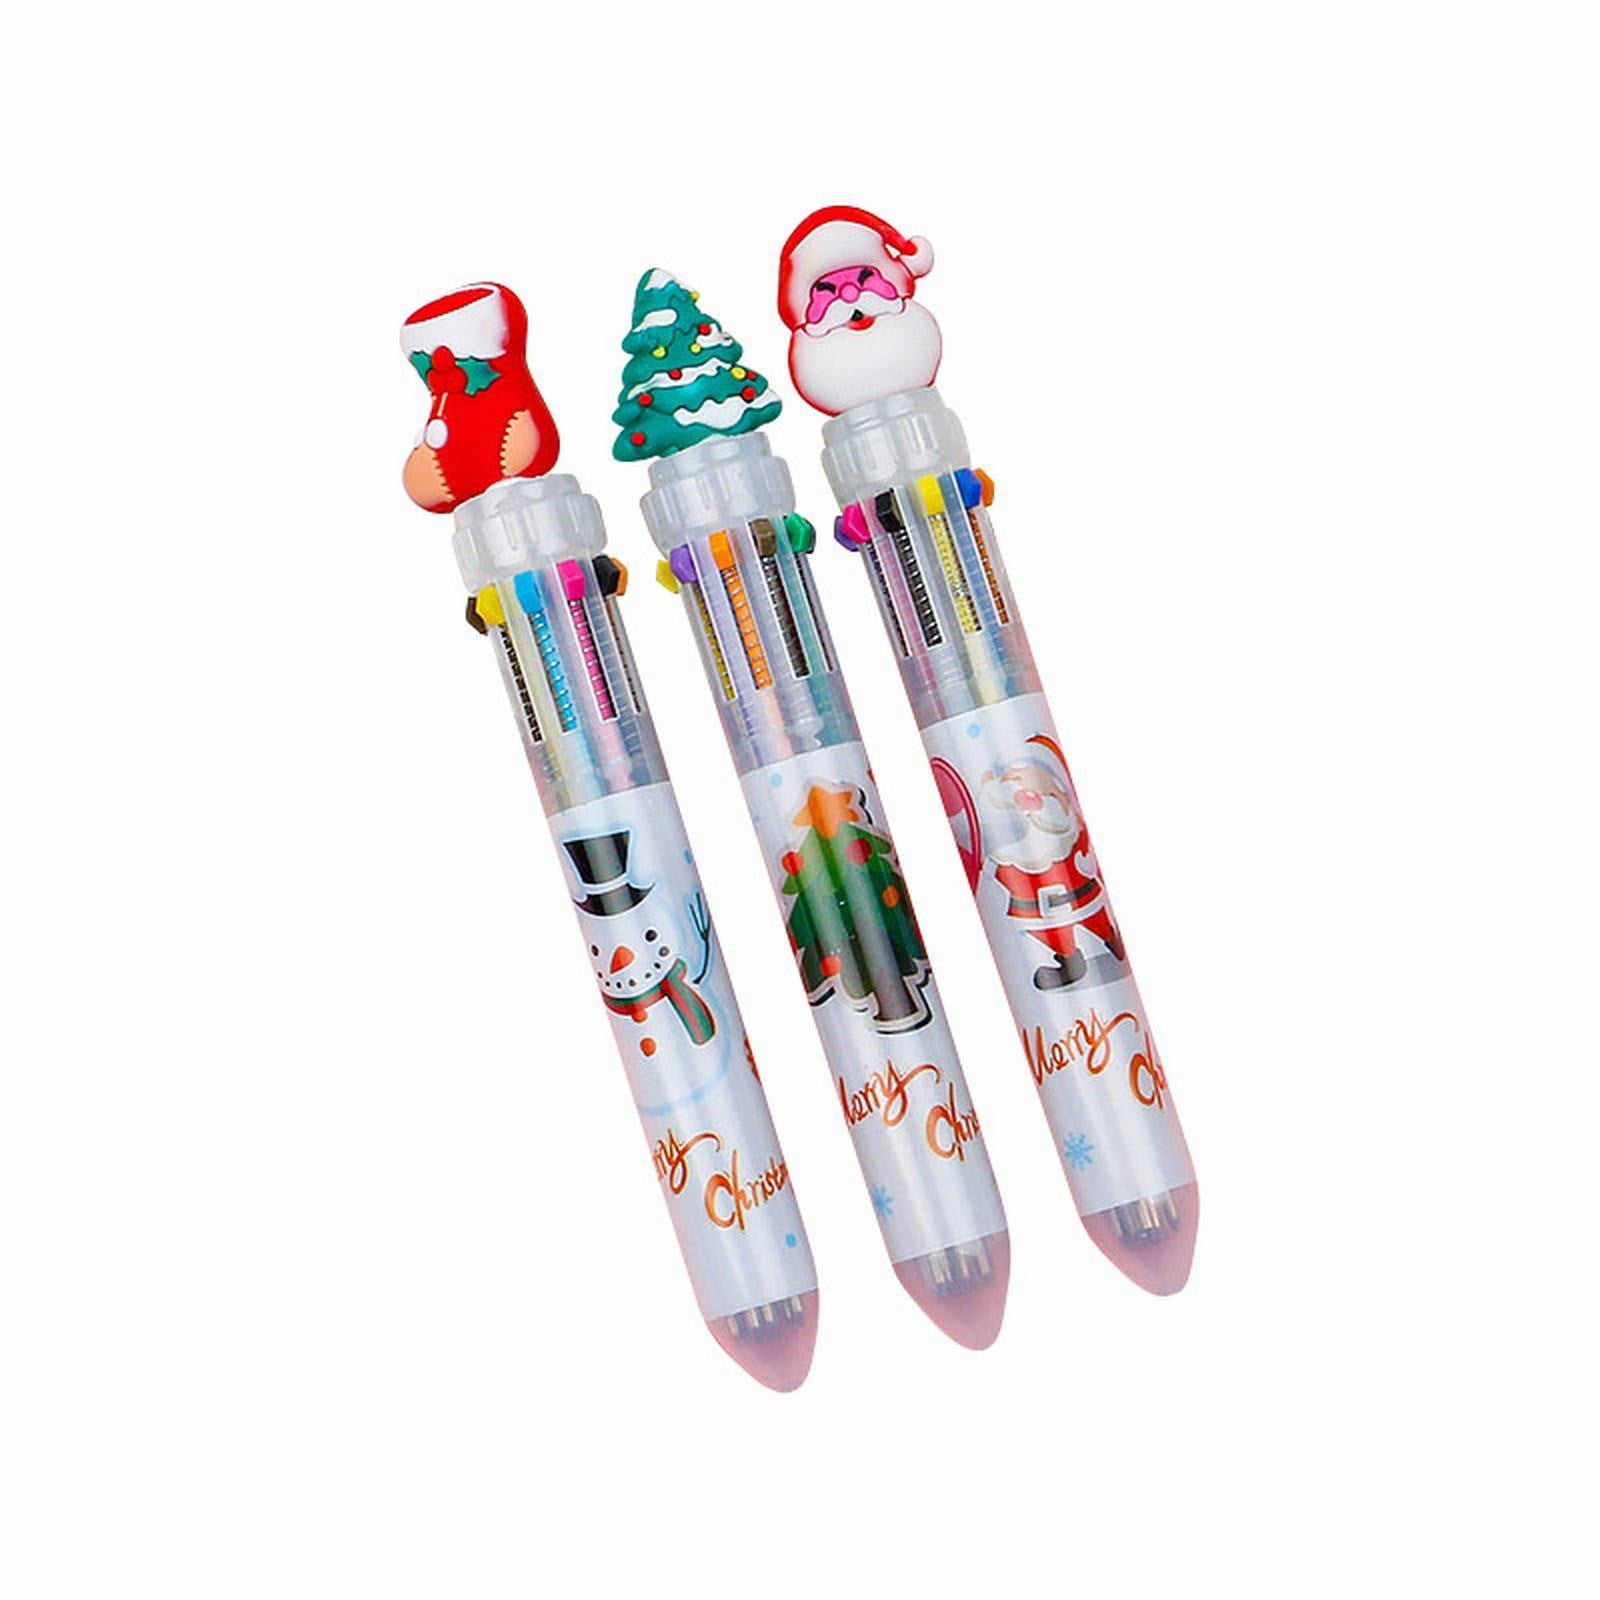  Zhanmai 100 Pcs Christmas Pens Bulk Christmas Ballpoint Pens  Xmas Cute Novelty Pens Heart Star Shaped Christmas Black Gel Ink Pens Bulk  for Party Favors School Office Kids Adults Gifts